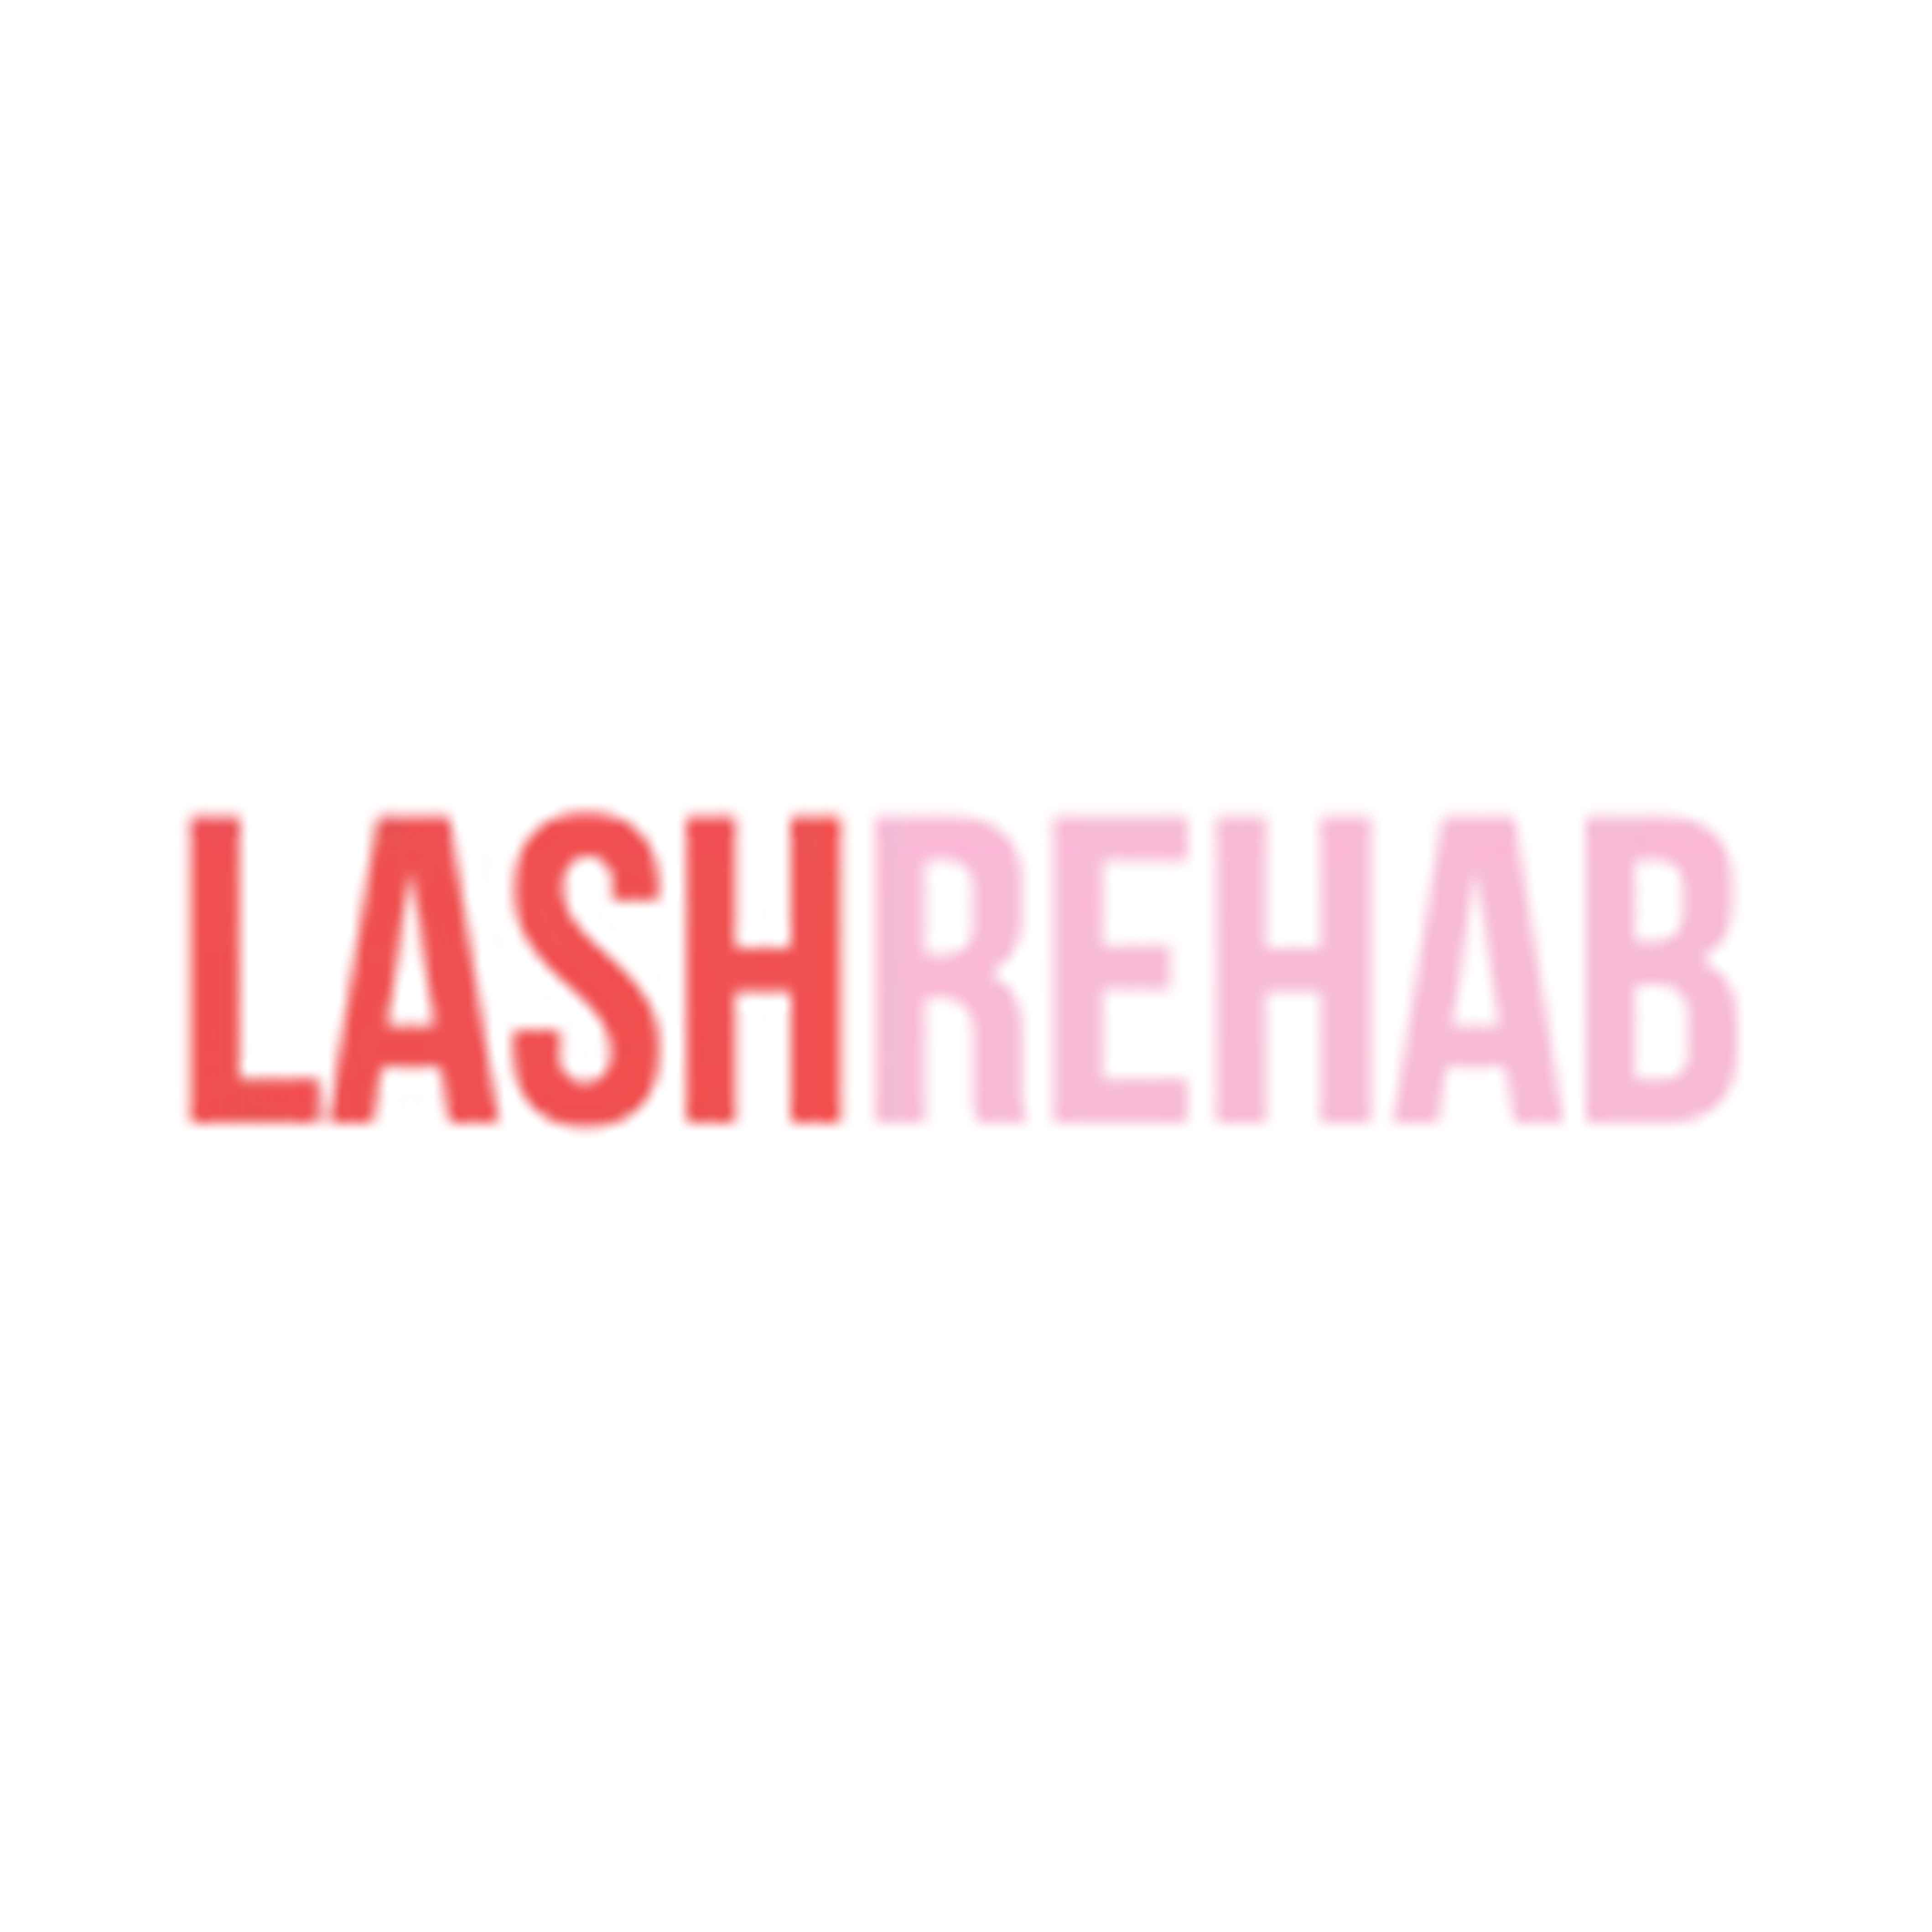 The Lash Rehab coupon codes